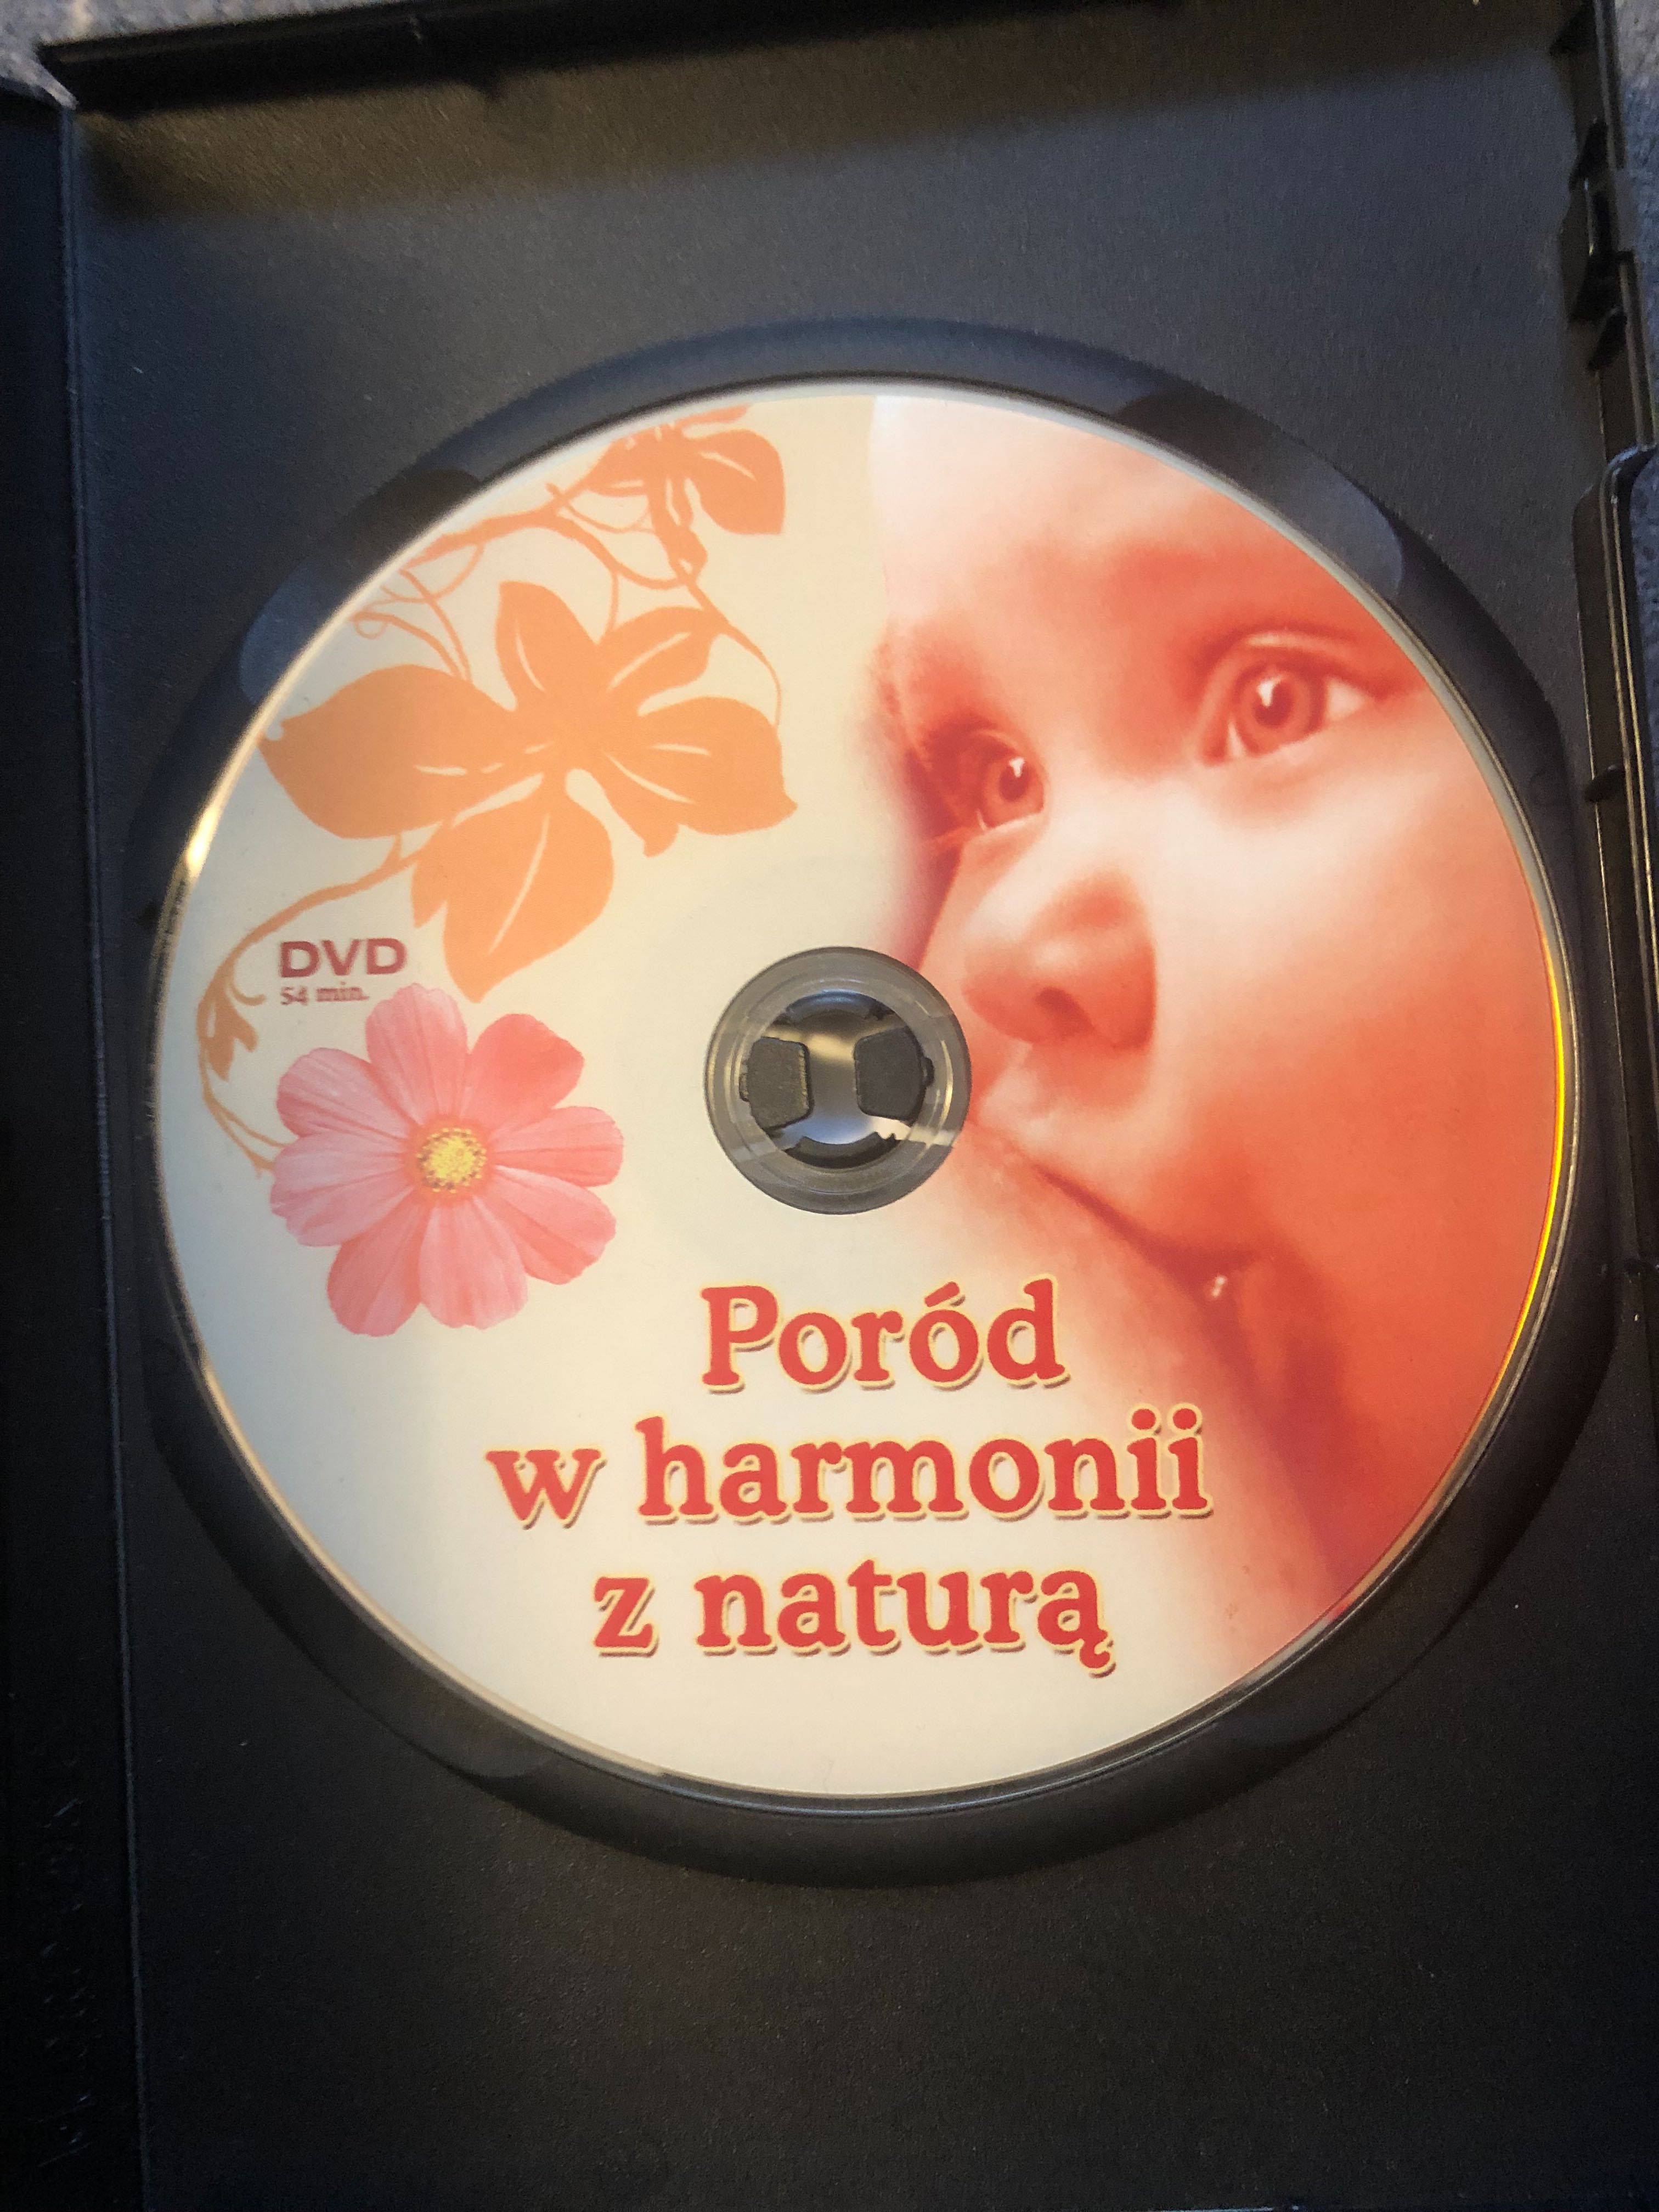 Poród w harmonii z naturą, dr Preeti Agrawal. Płyta DVD.